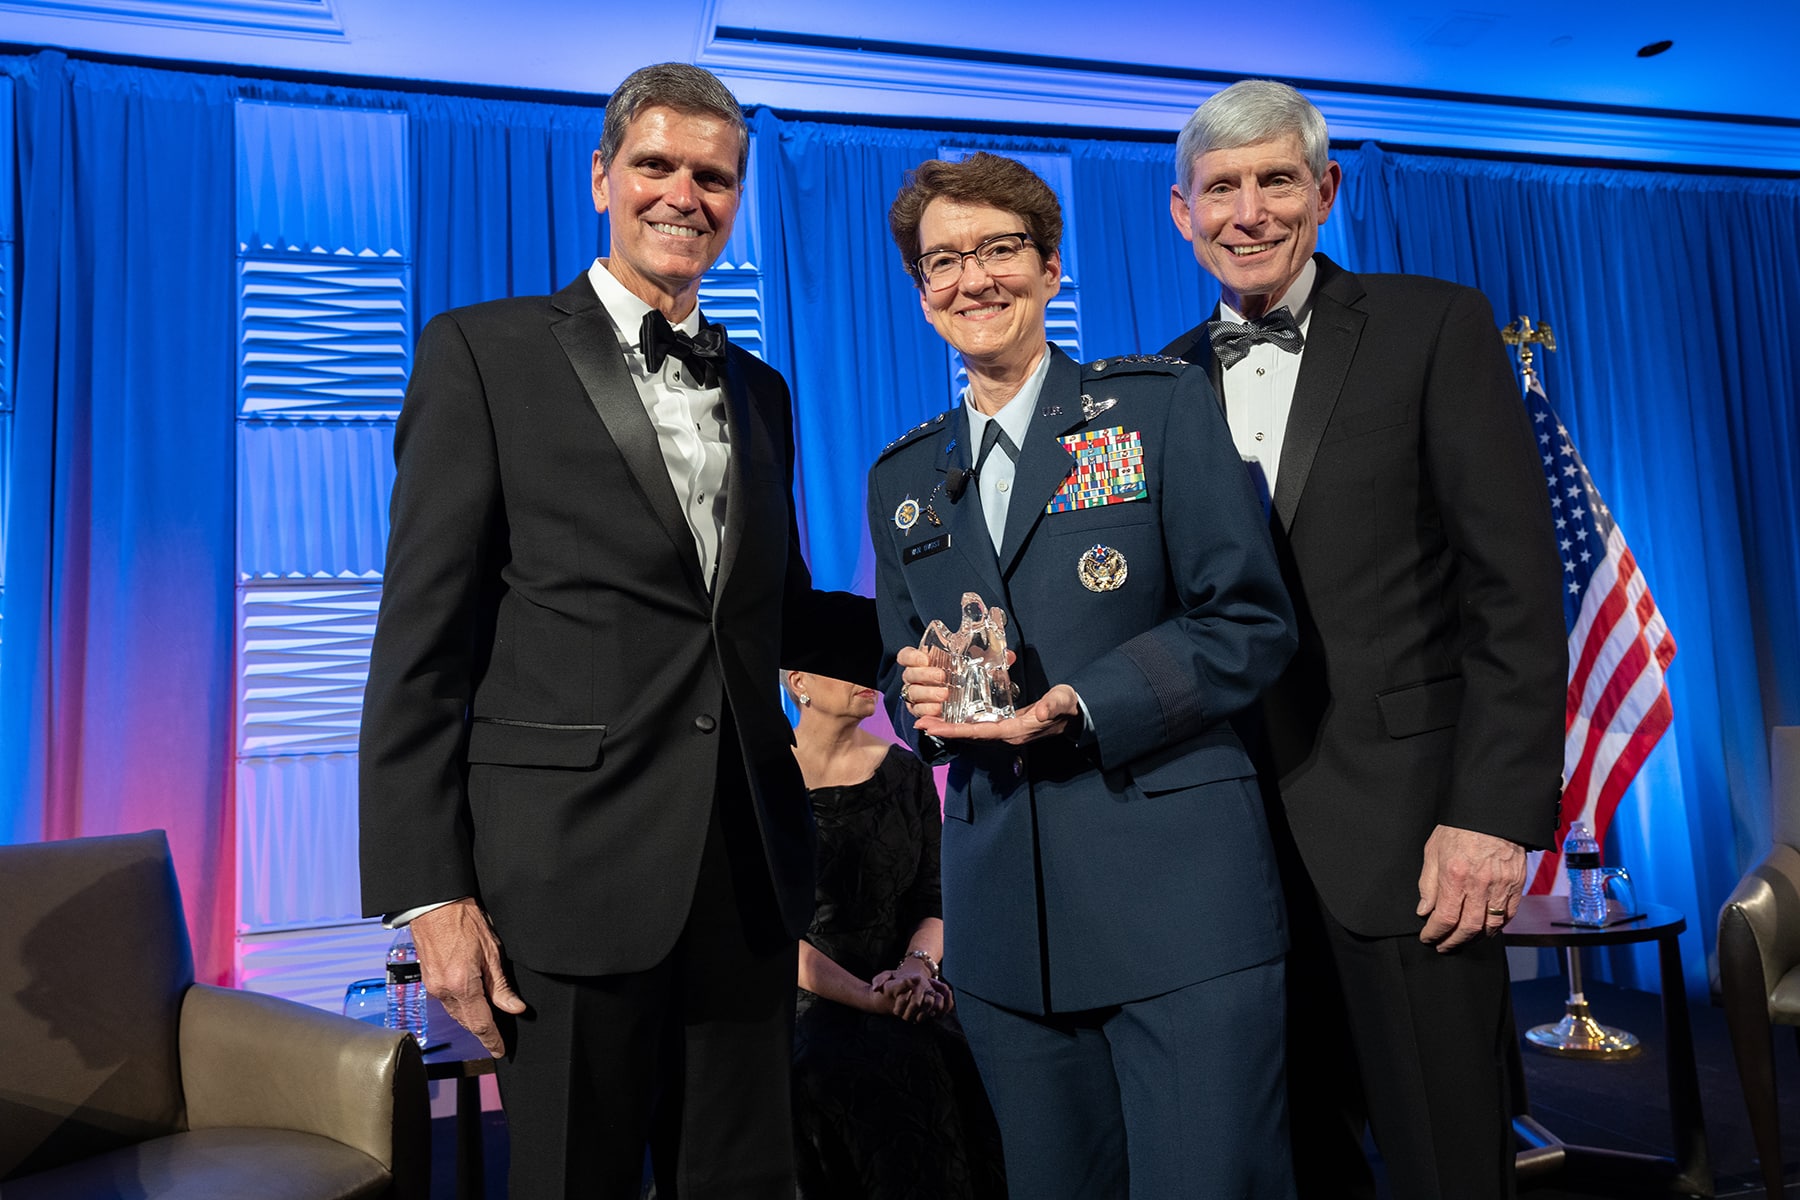 Eisenhower Award is presented to General Jacqueline Van Ovost